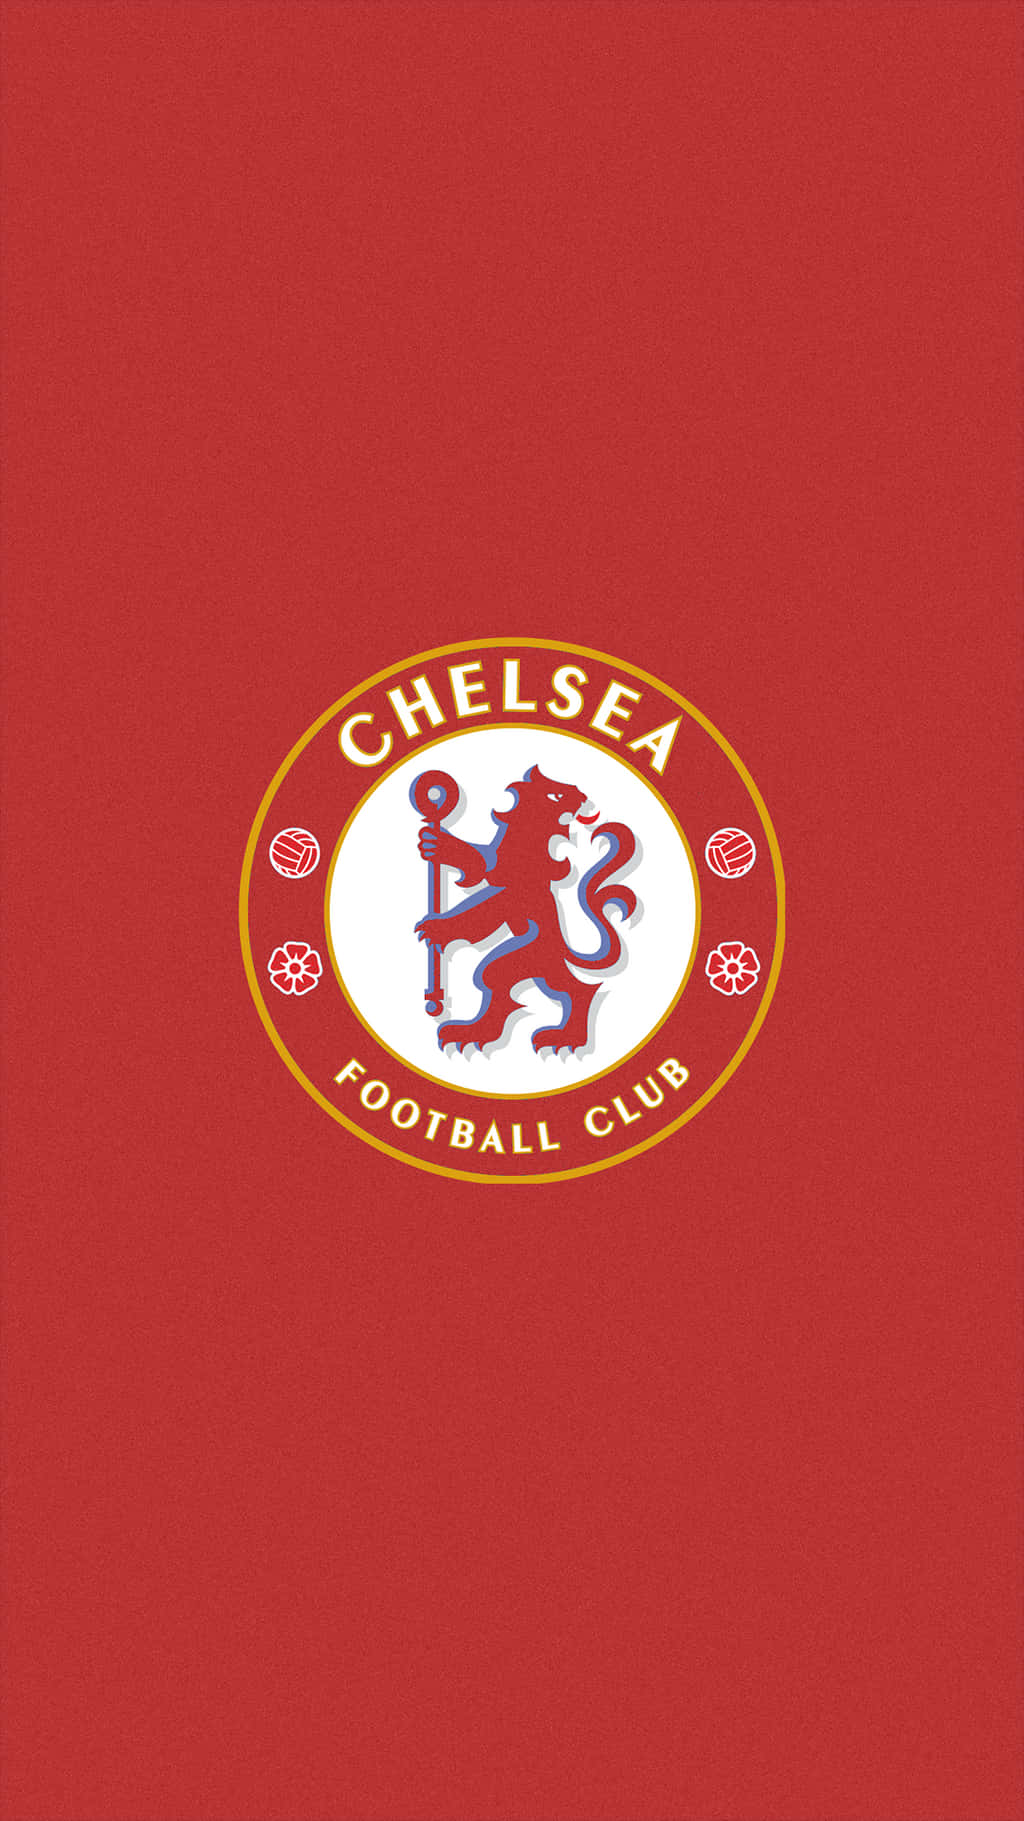 Logodel Chelsea Football Club Su Uno Sfondo Rosso Sfondo